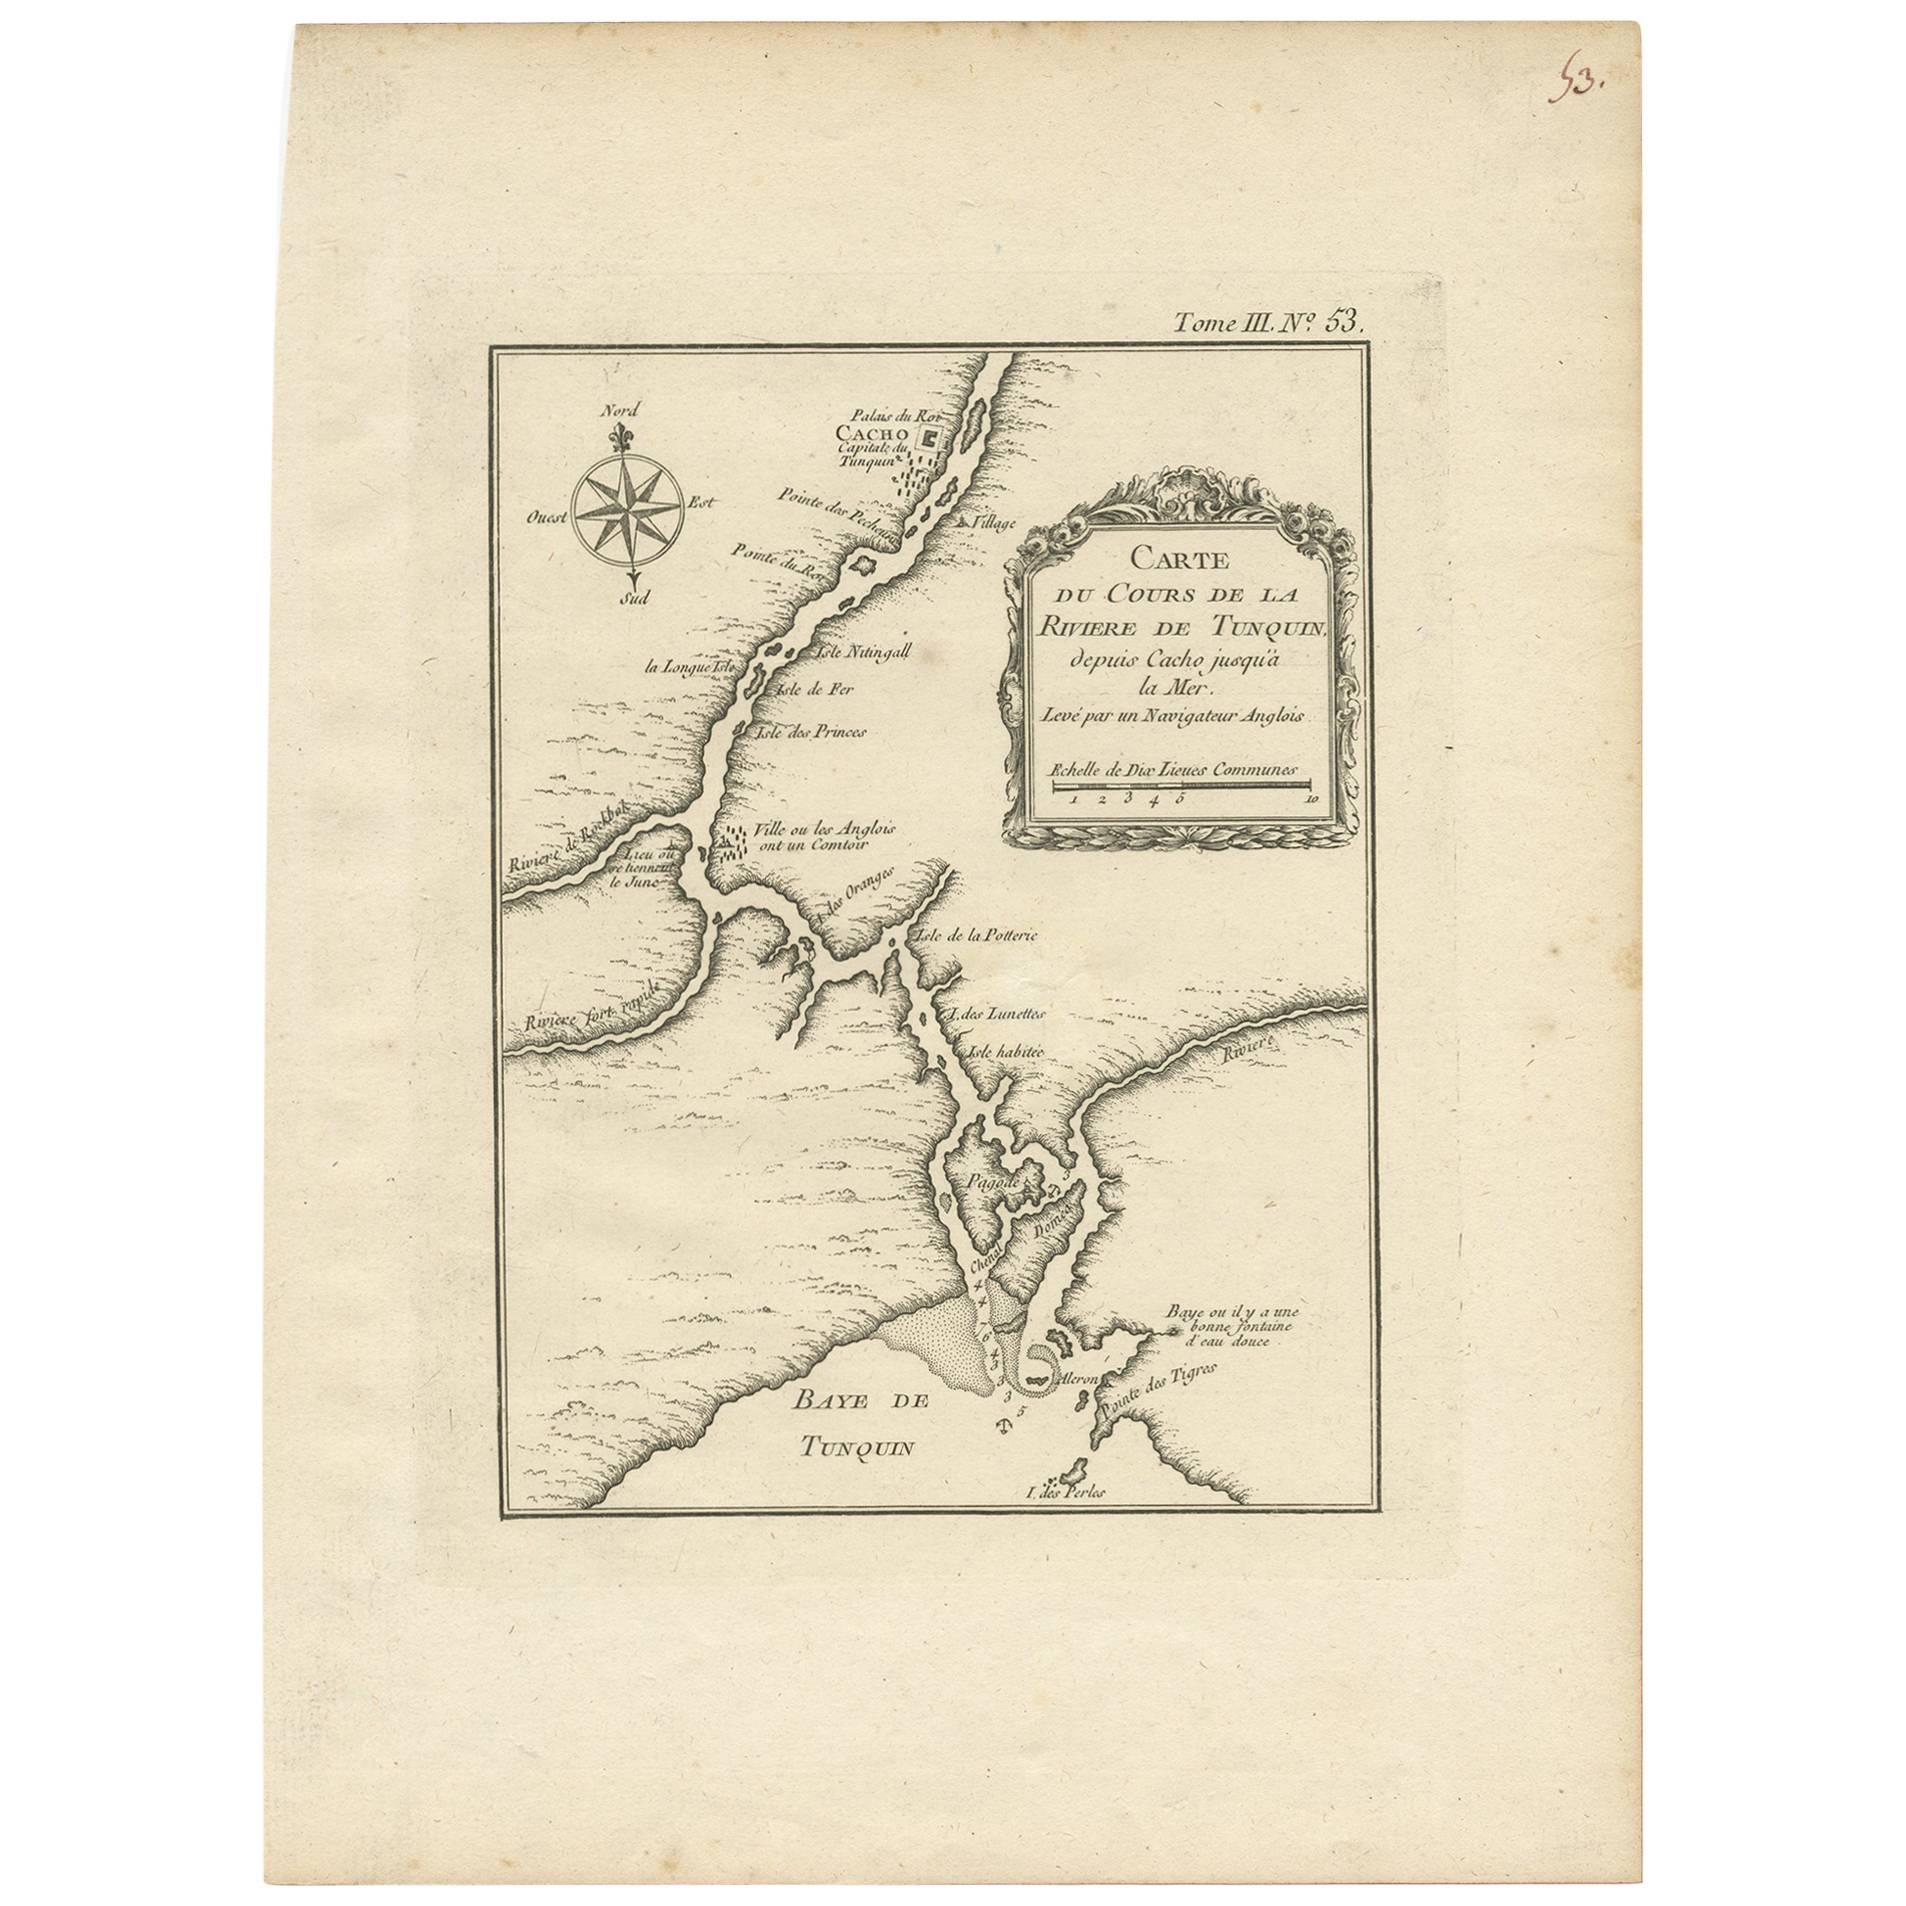 Antique Map of the Tonkin River ‘Vietnam’ by J.N. Bellin, 1764